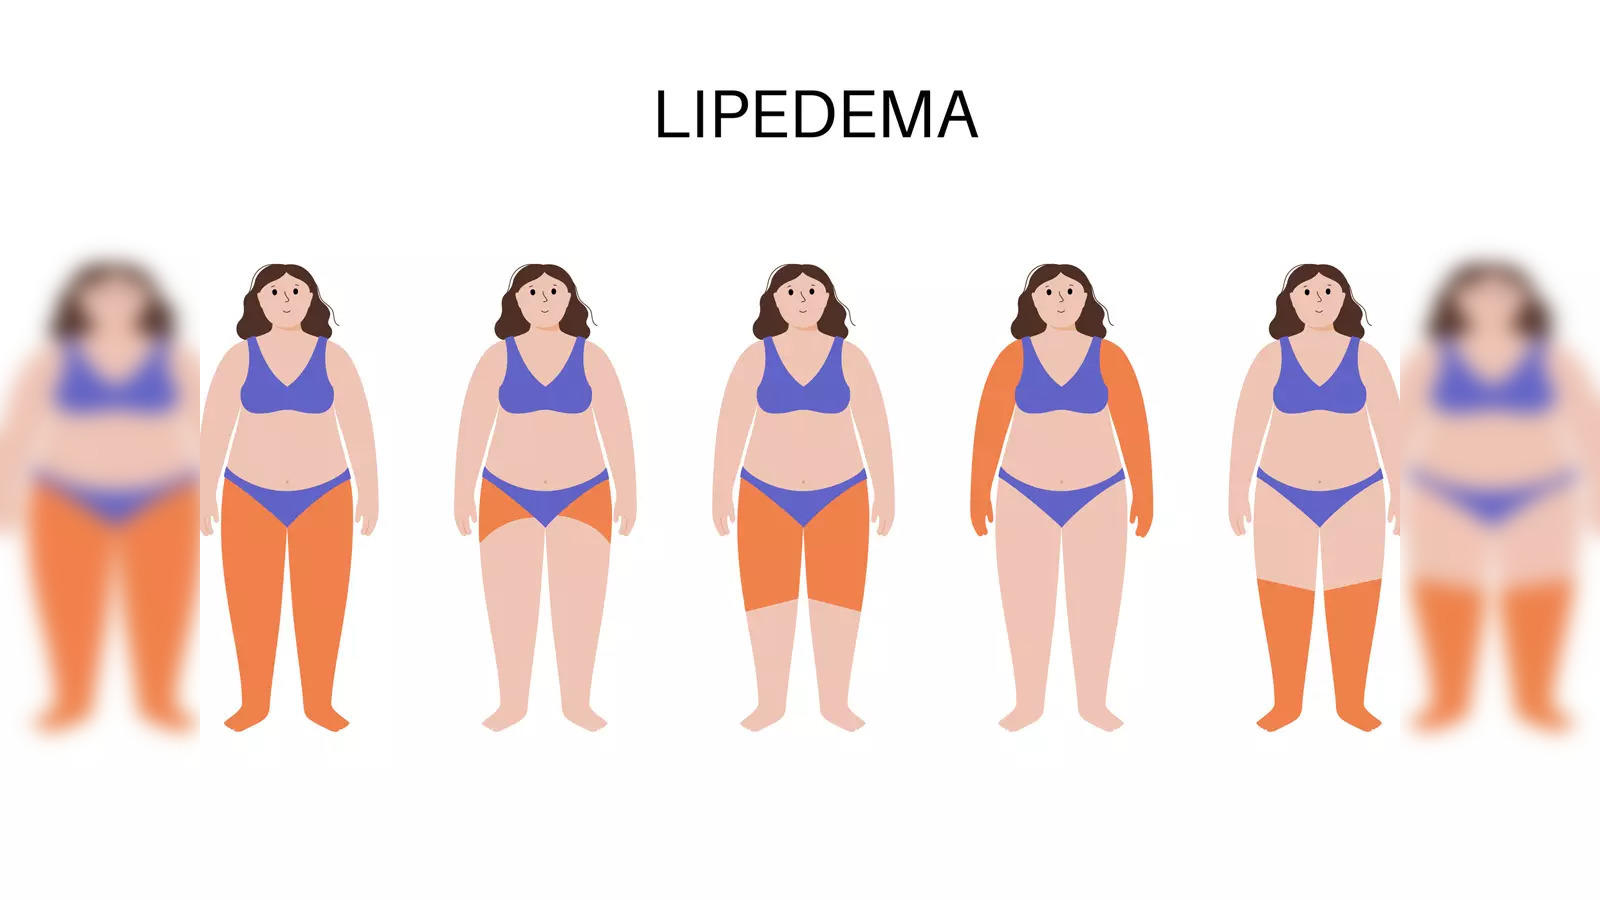 Conservative Treatments for Lipedema 